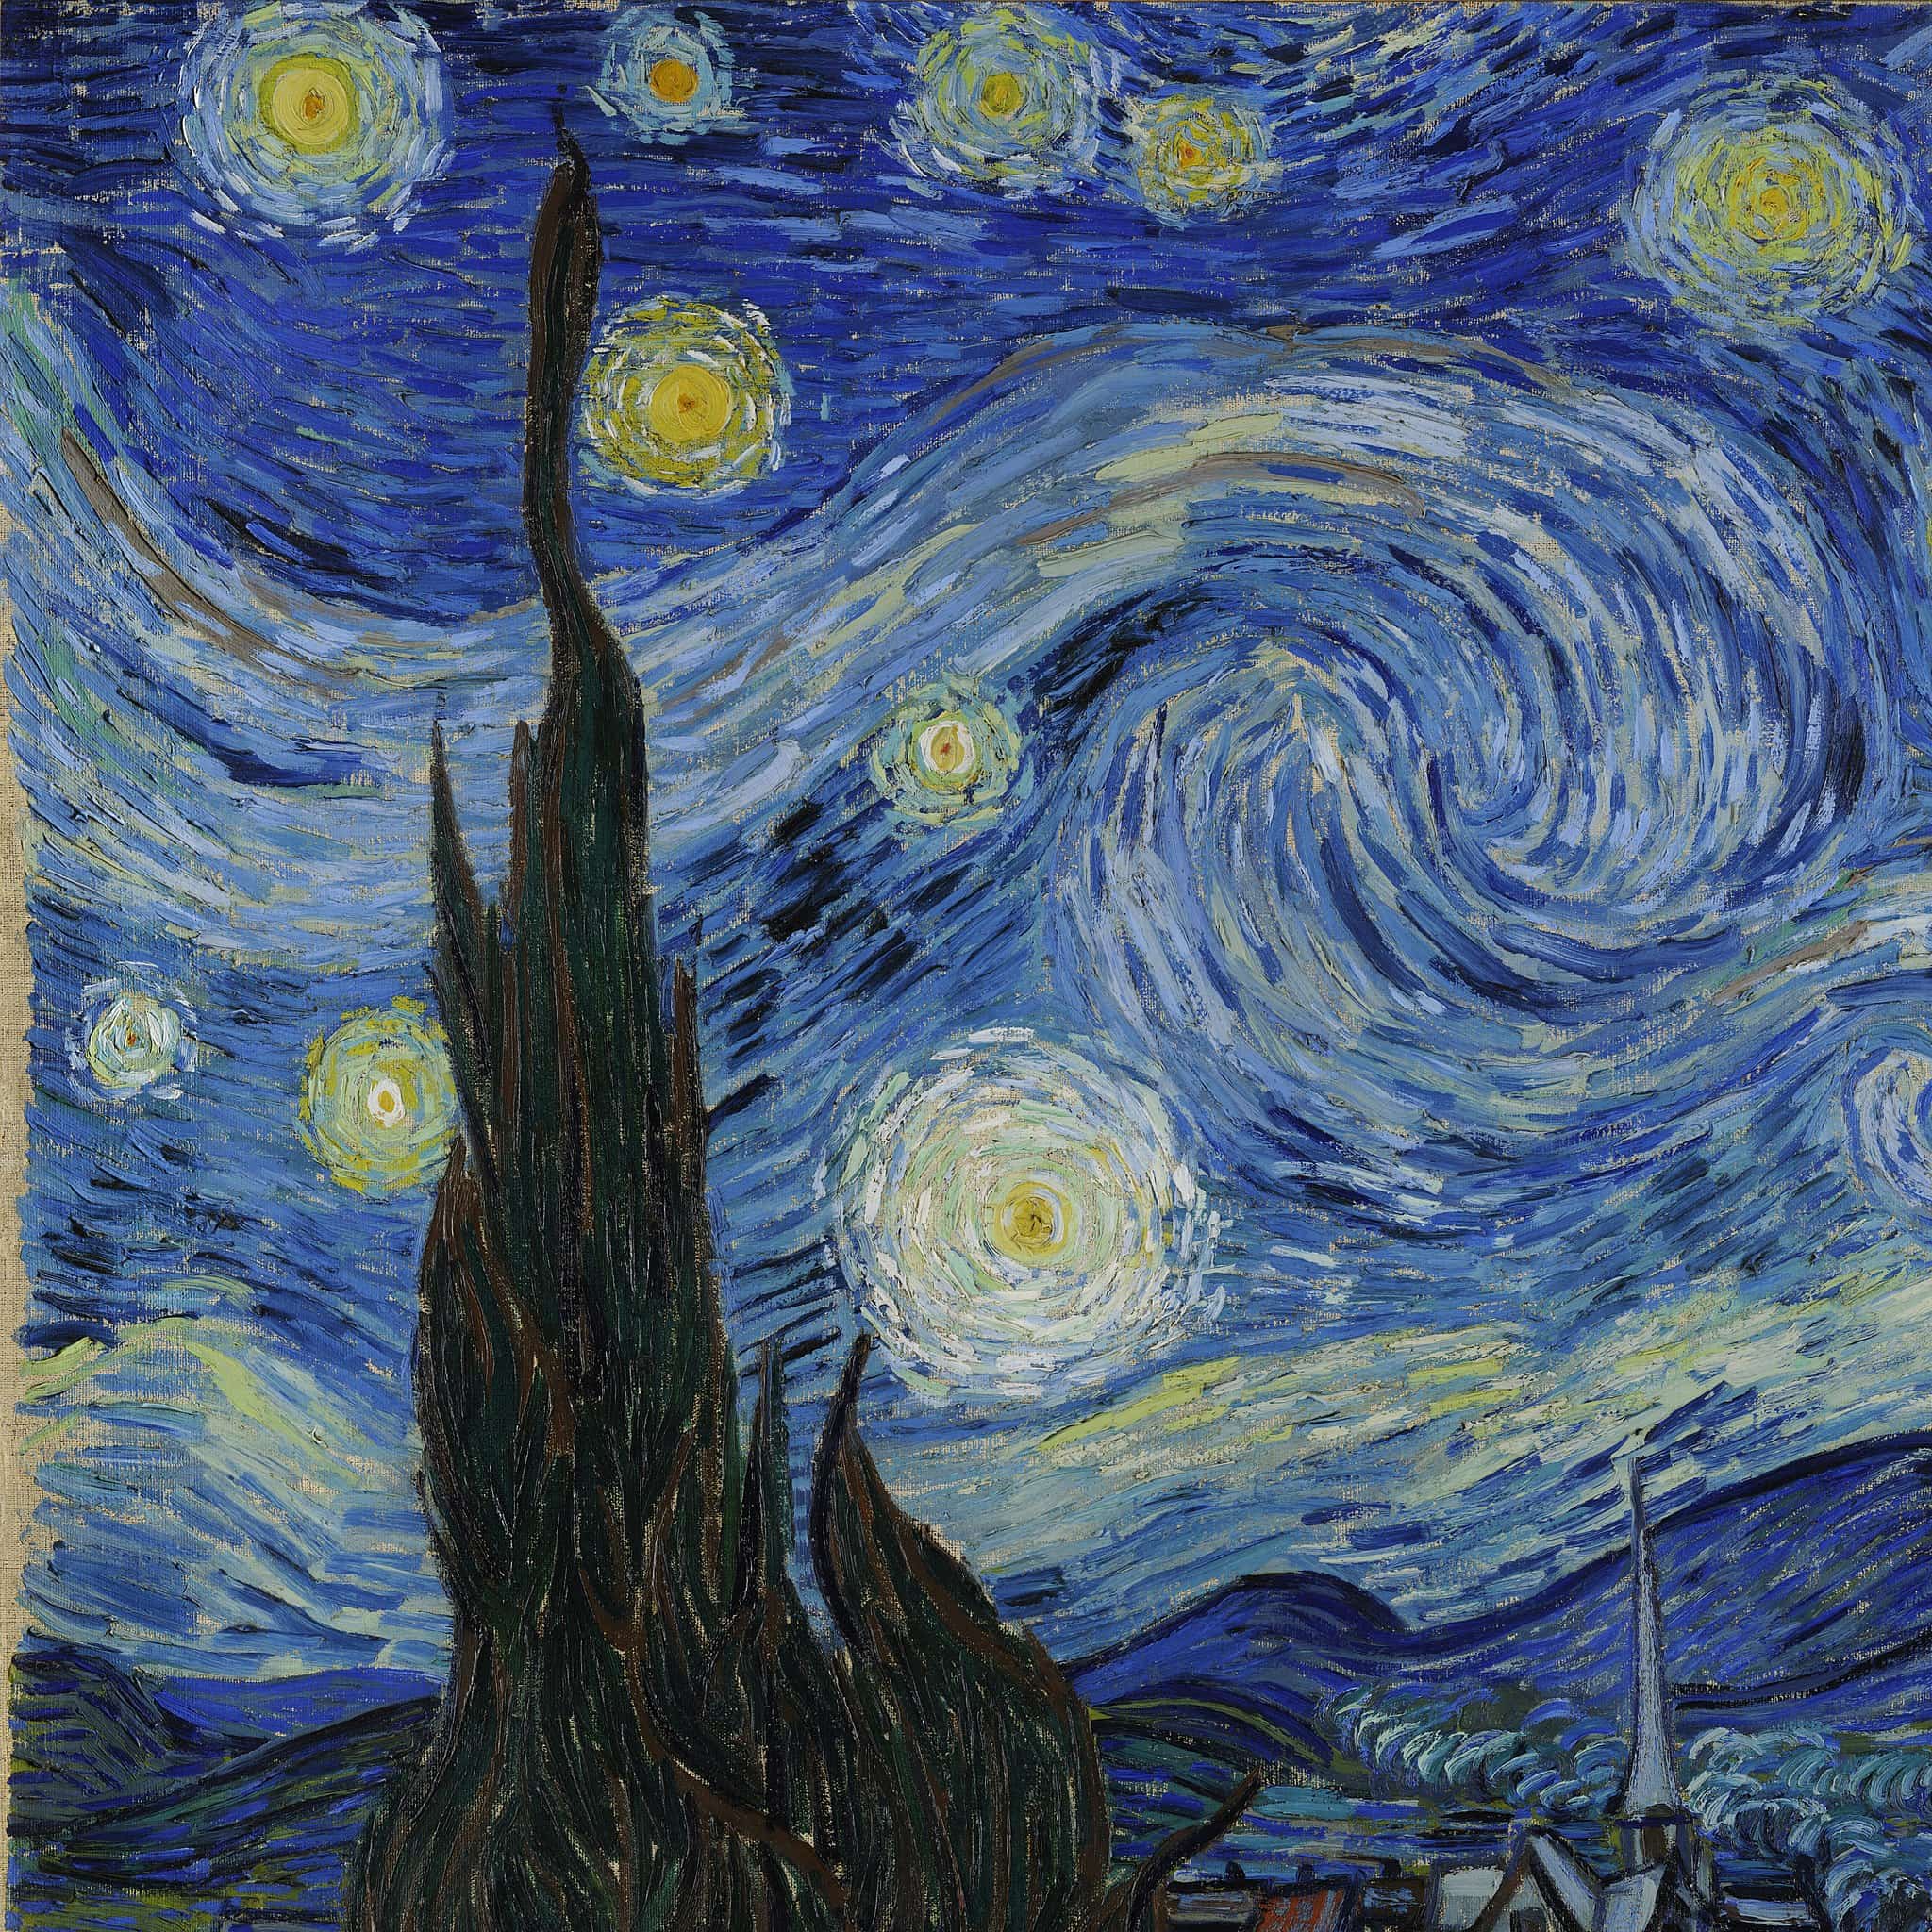 "Notte stellata", Vincent Van Gogh (tecnica oleografia su tela, 1889, Museum of Modern Art di New York)